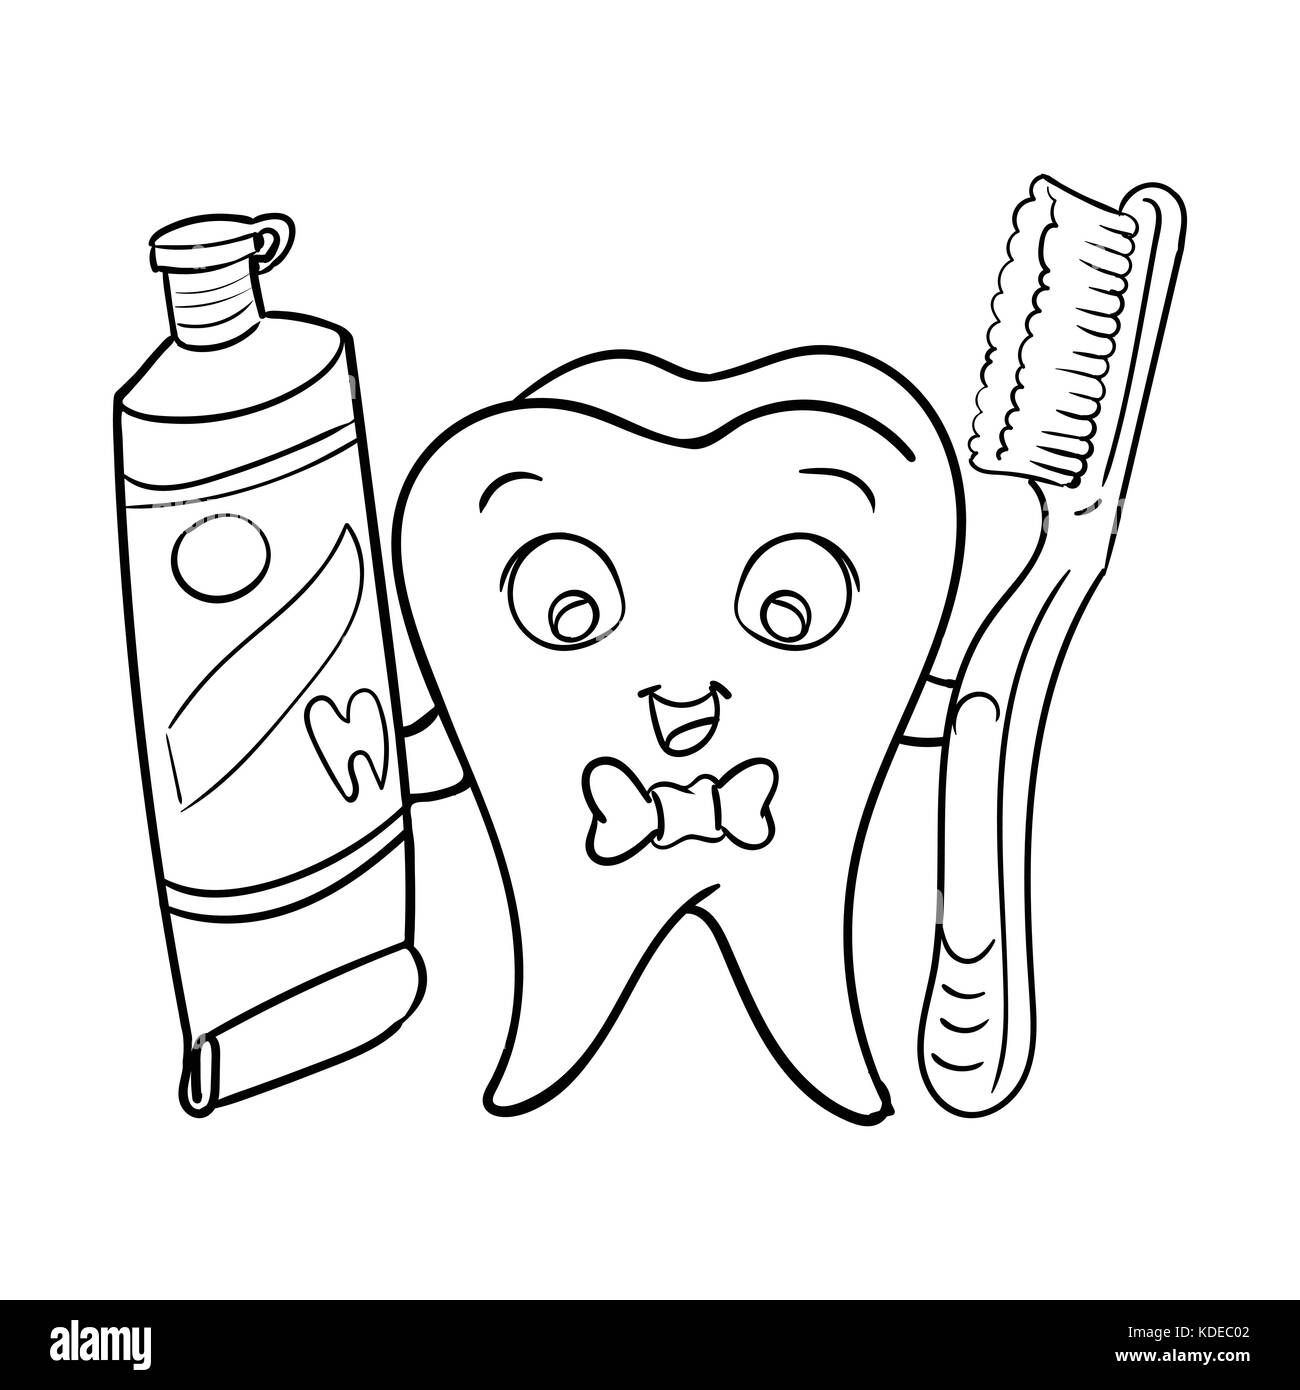 Cartoon smiley dent dentaire dentifrice holding et brosse à dents-vector character design. Illustration de Vecteur